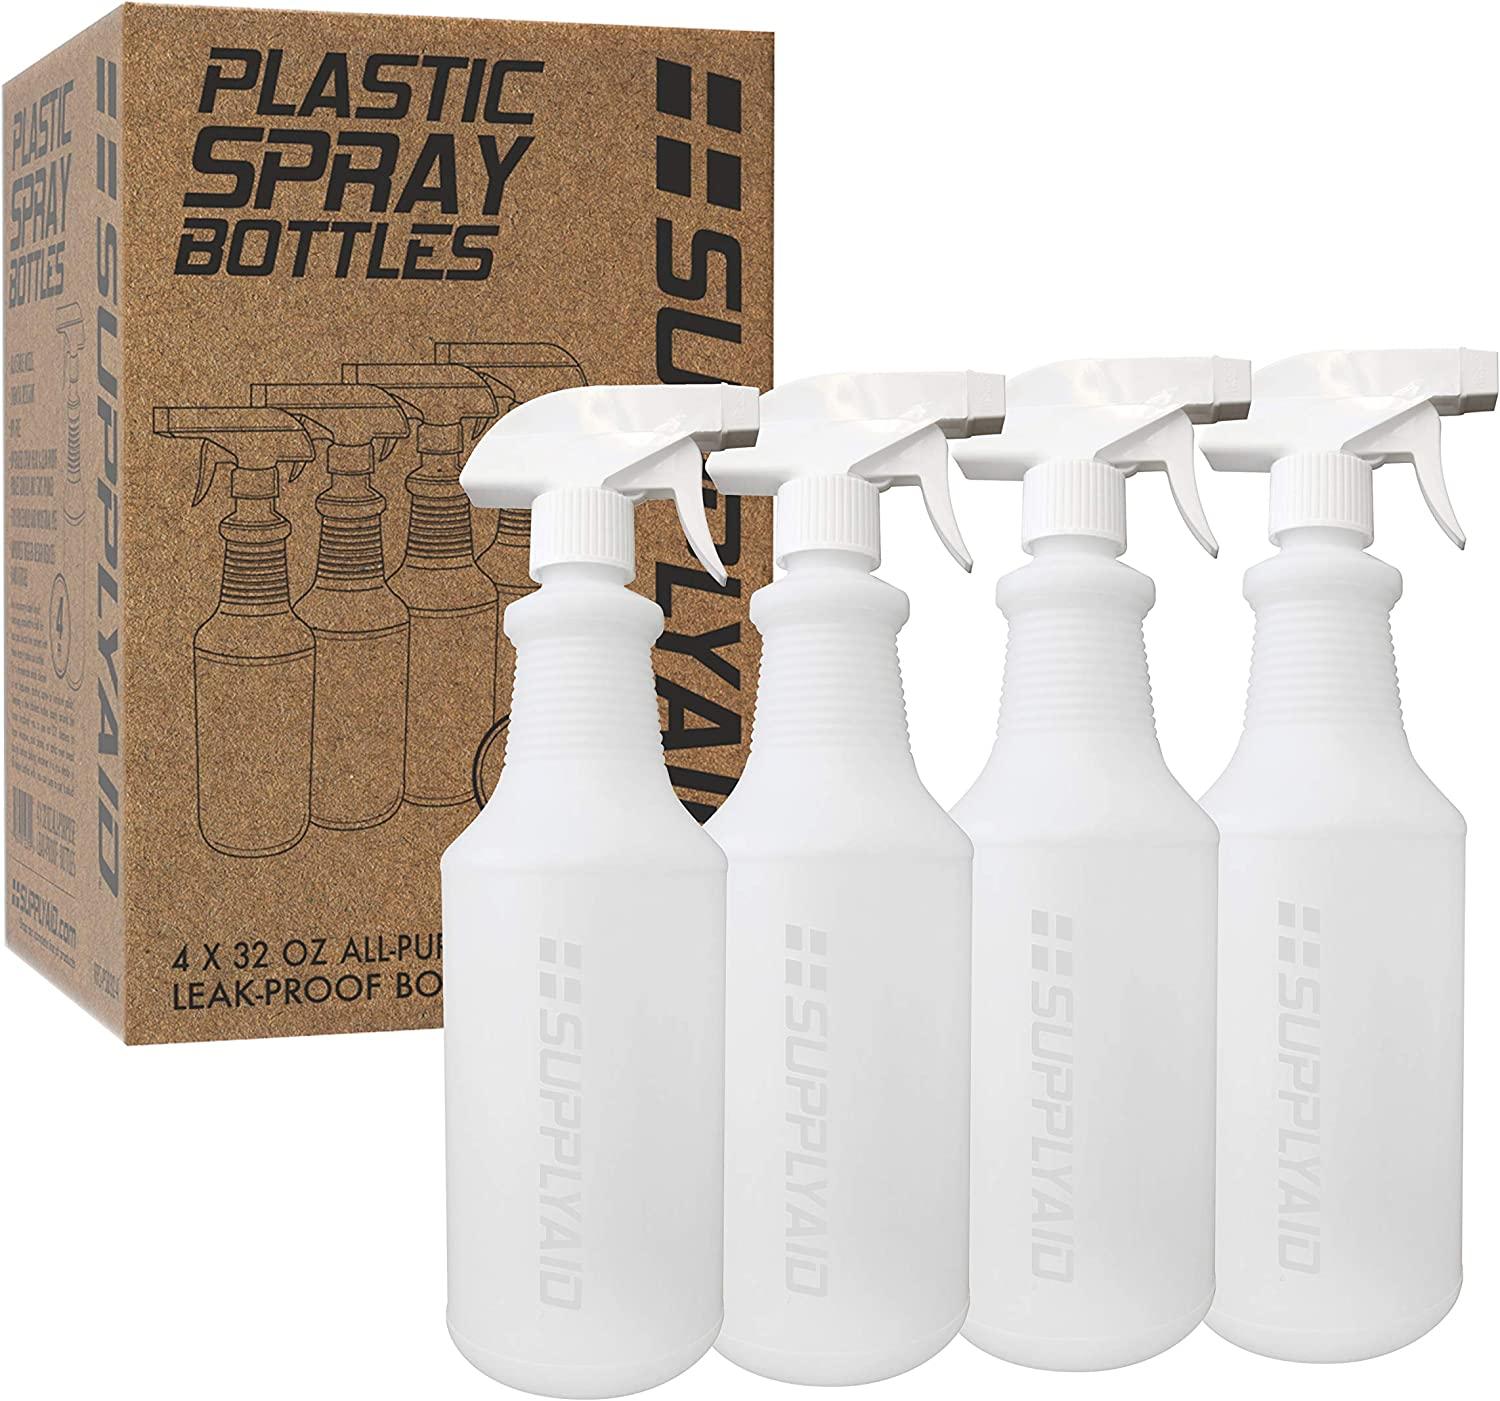 SupplyAid Heavy Duty Plastic Spray Bottles 4 Pack for $4.53